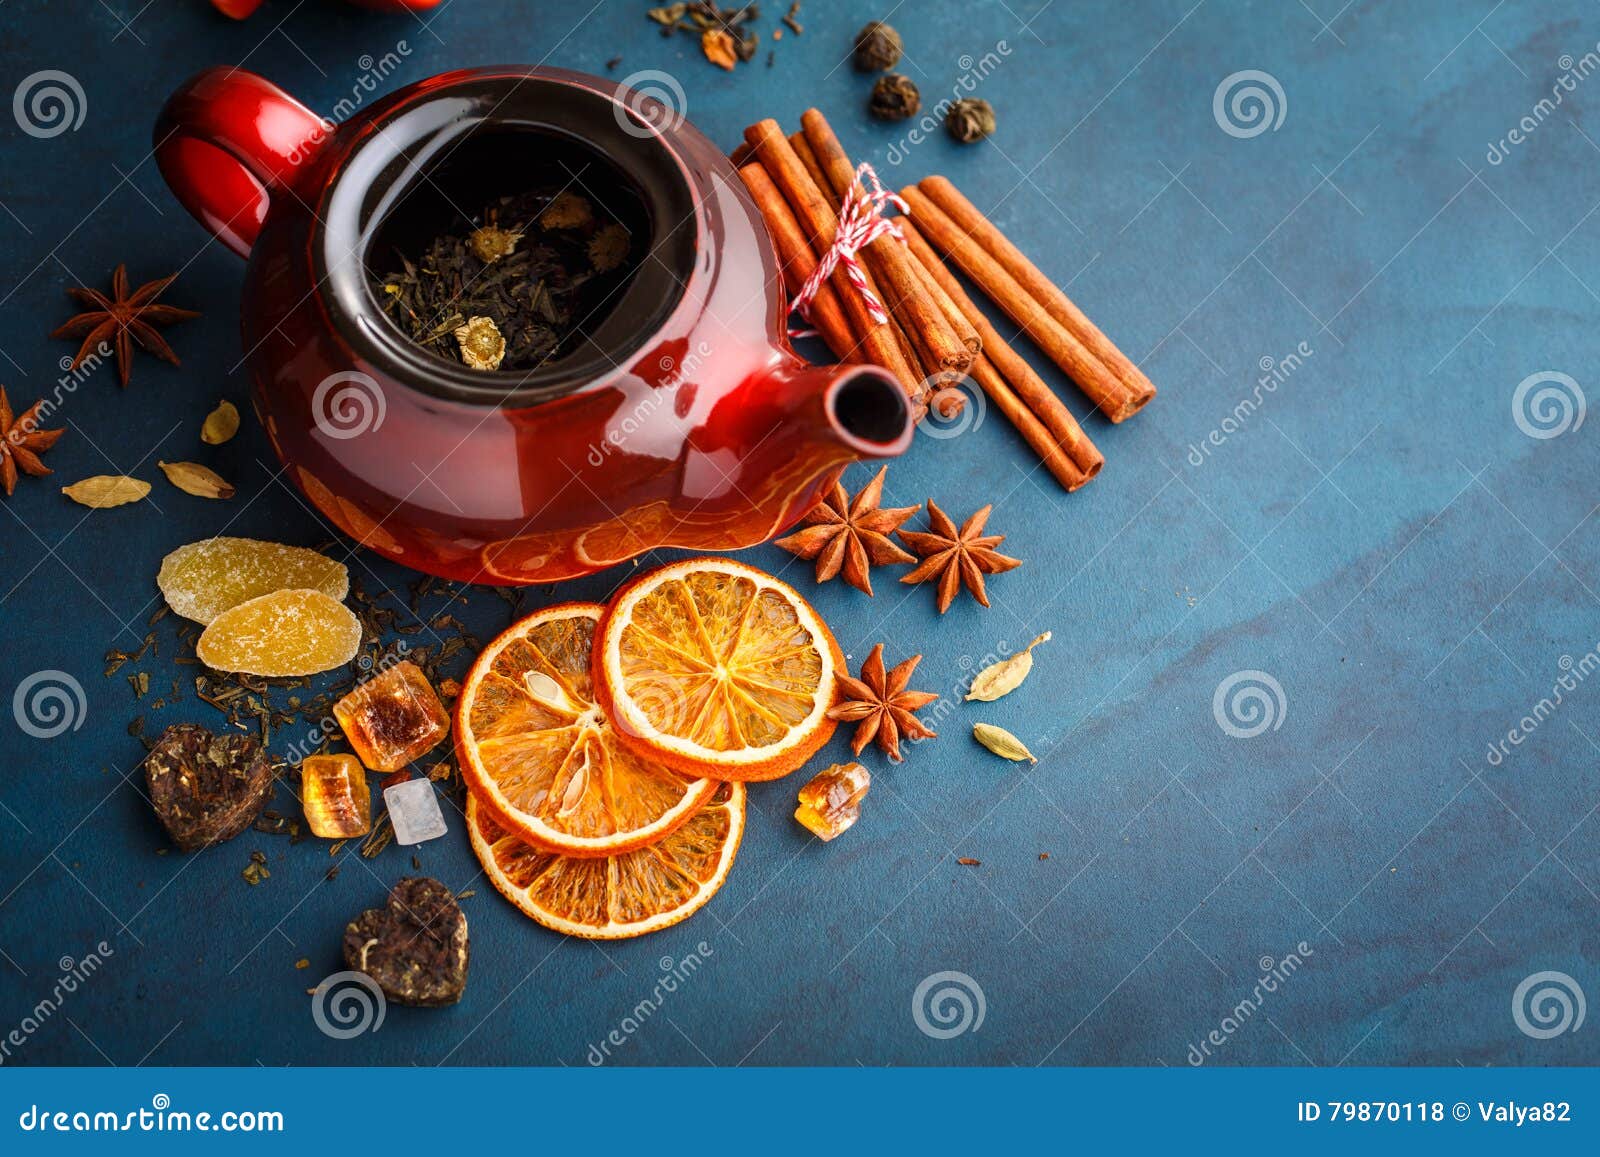 teapot with dry tea